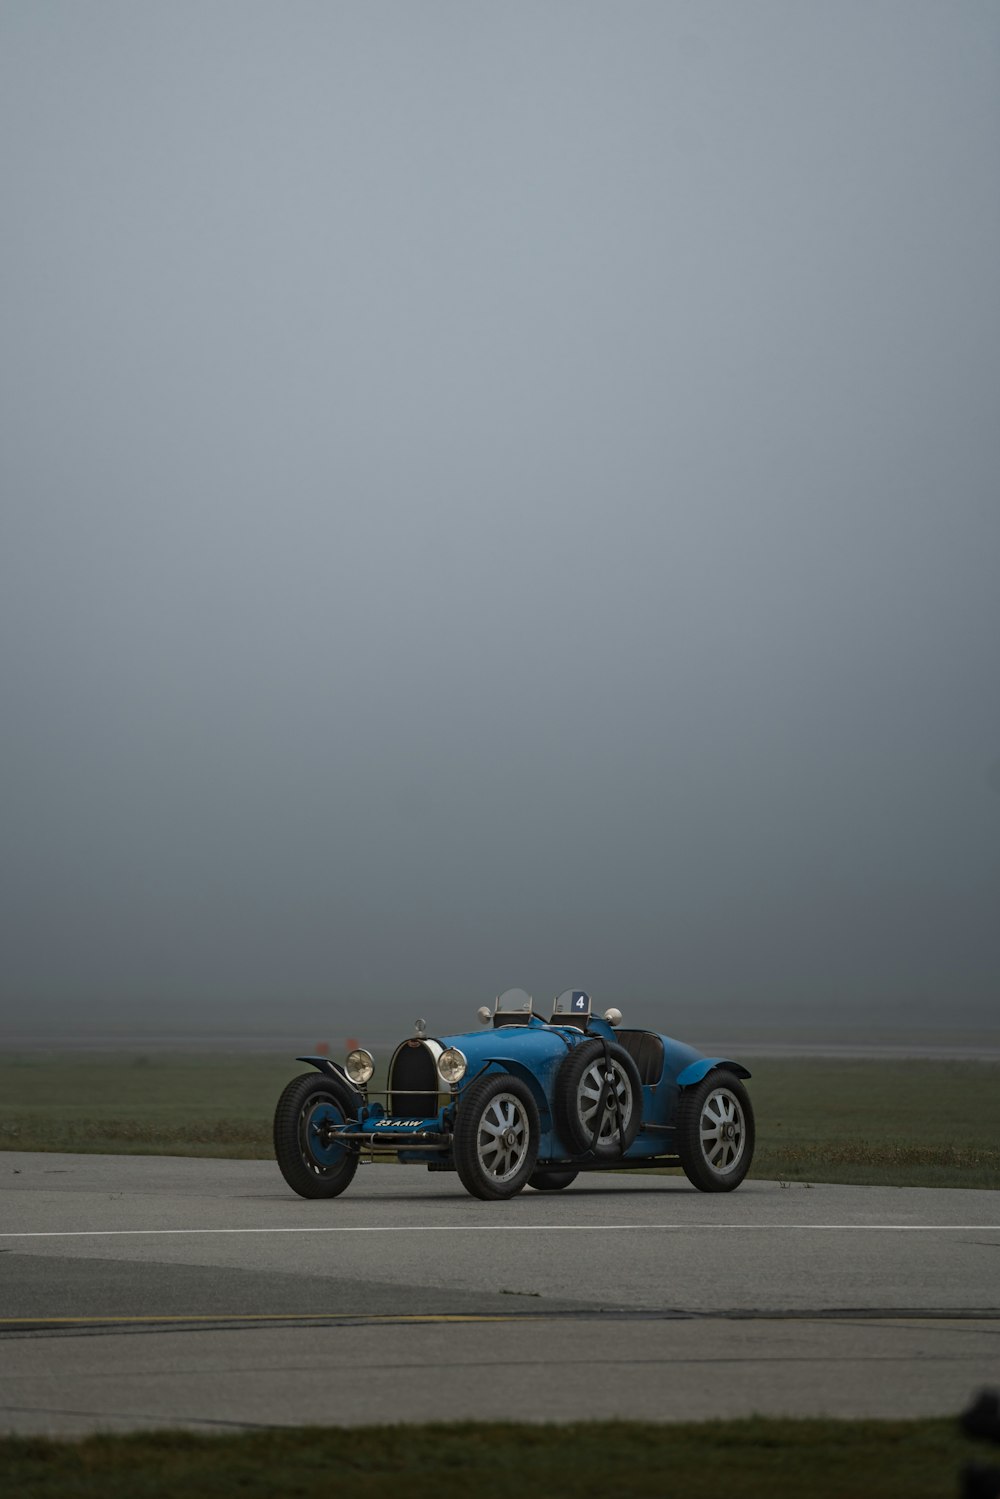 a blue race car driving down a runway